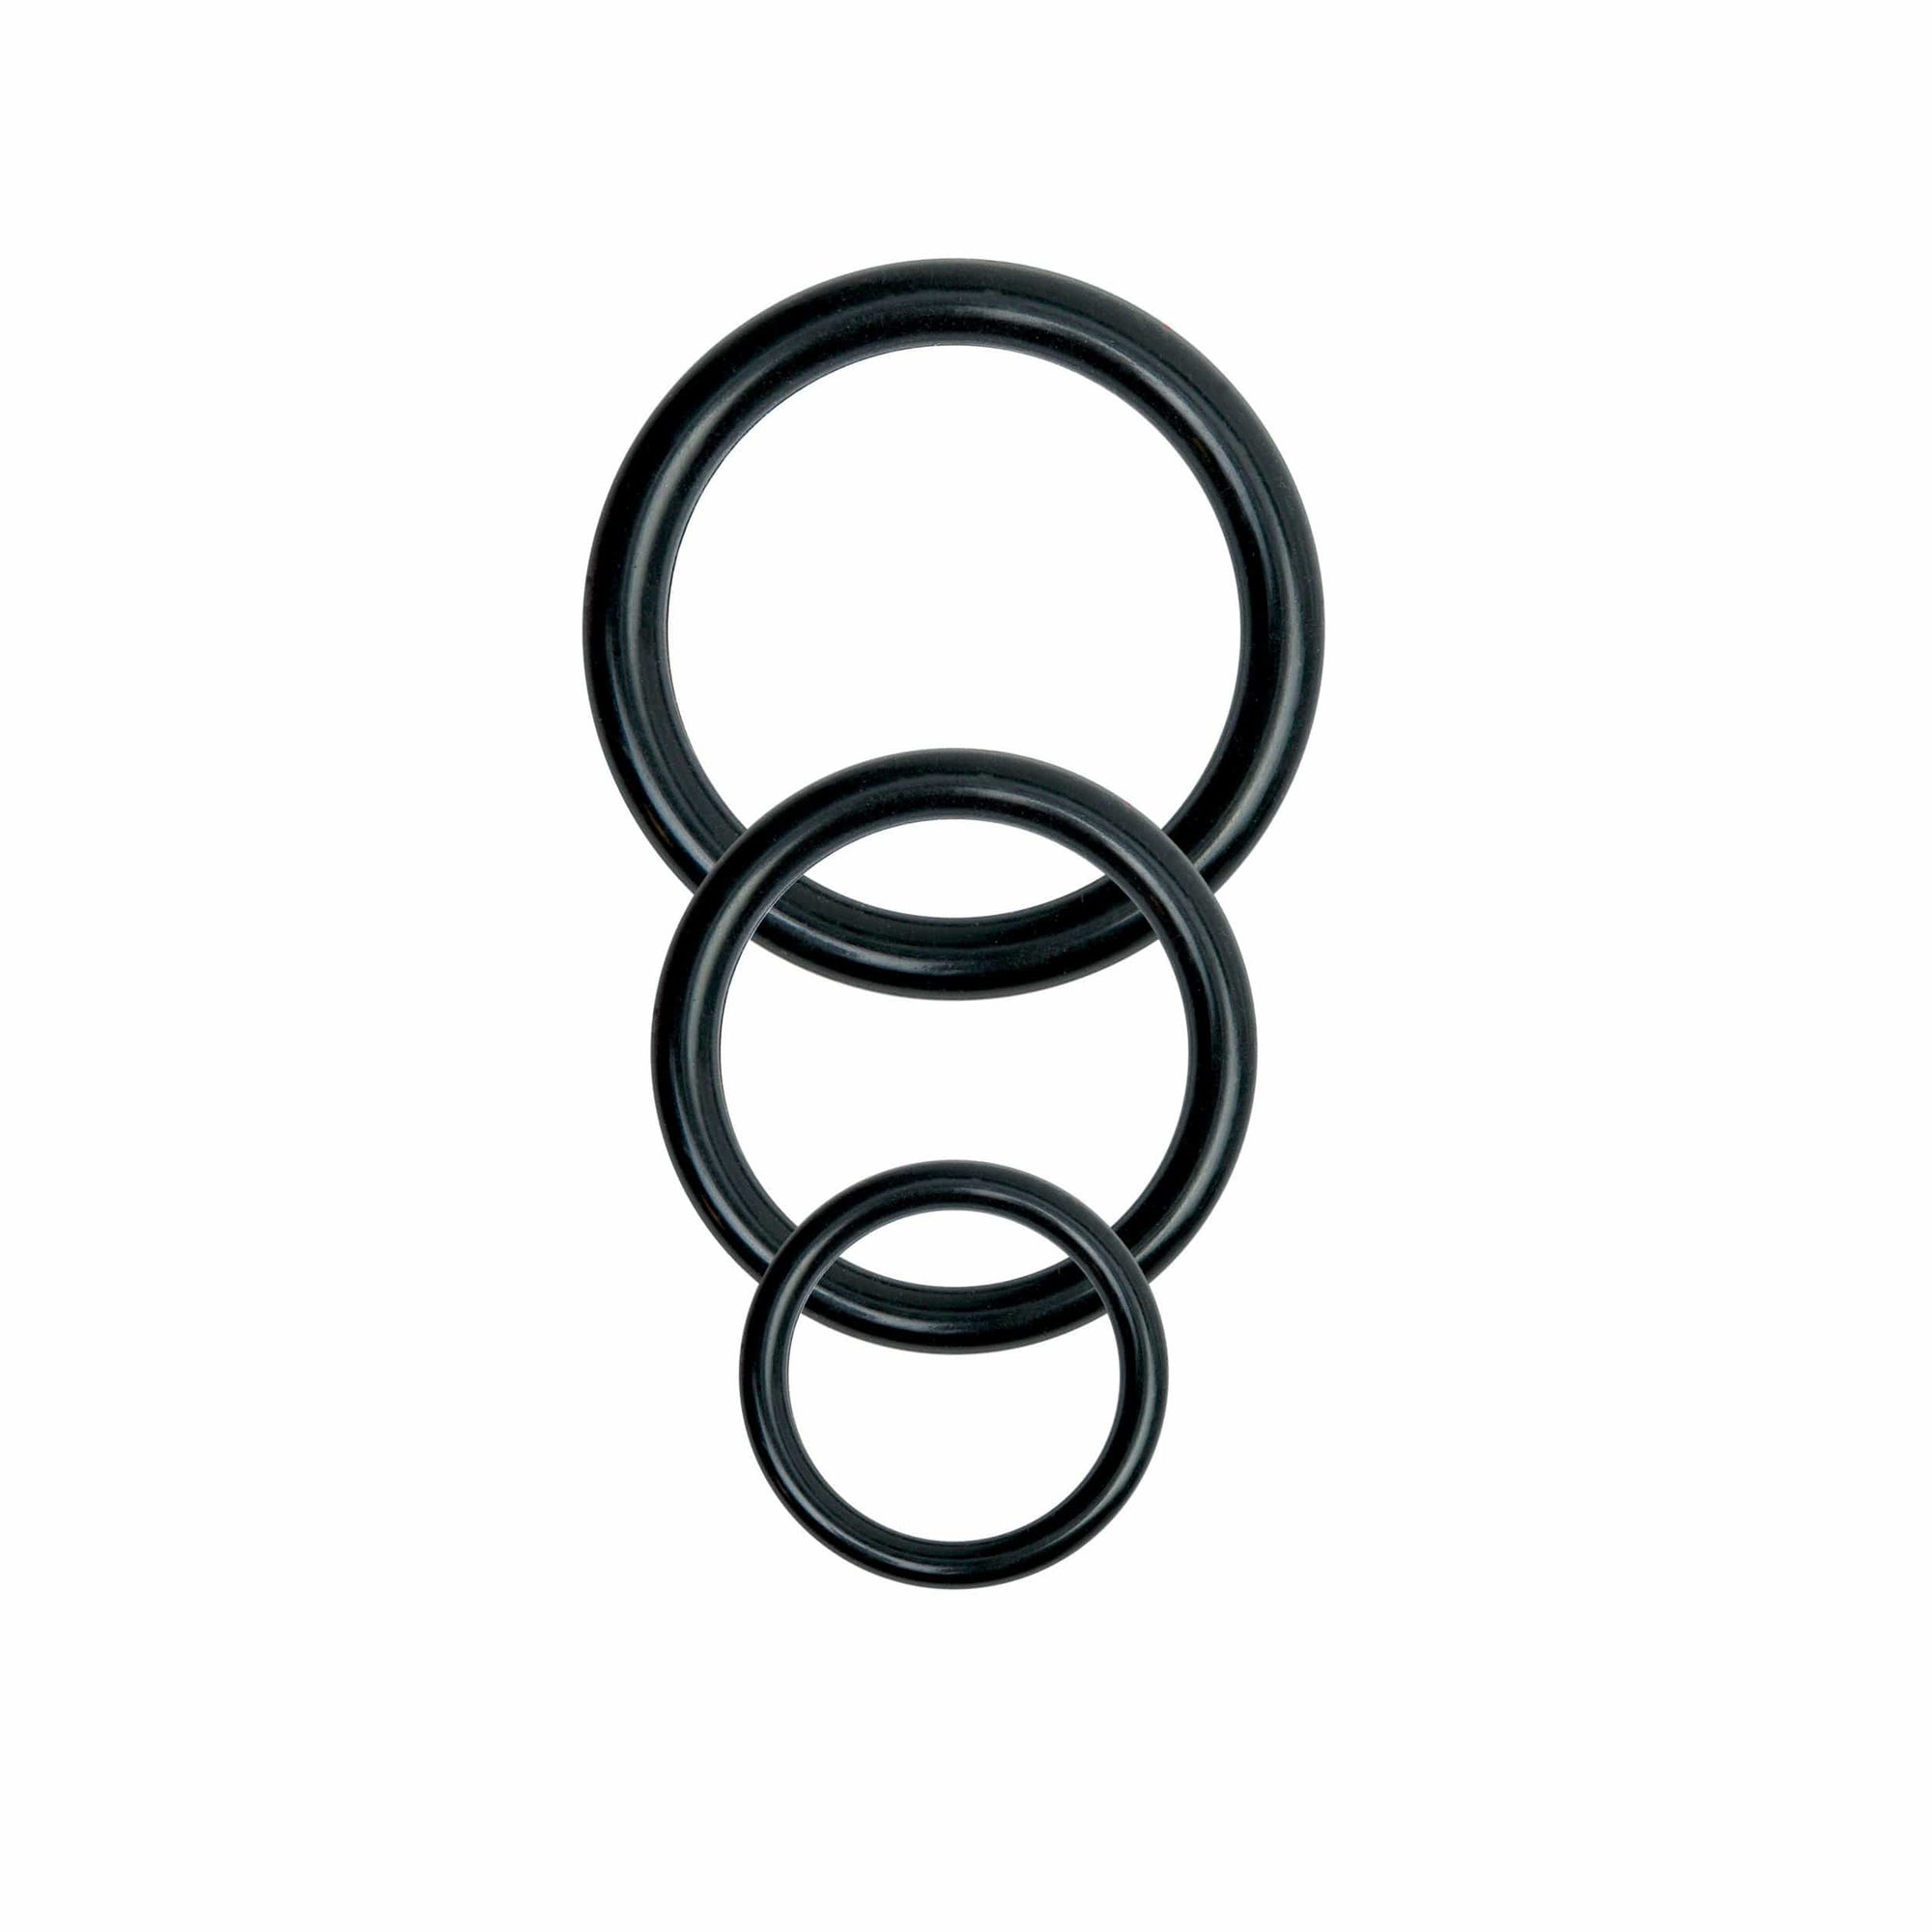 Pipedream - Basix Rubber Works Universal Harness Plus Size (Black) -  Strap On w/o Dildo  Durio.sg